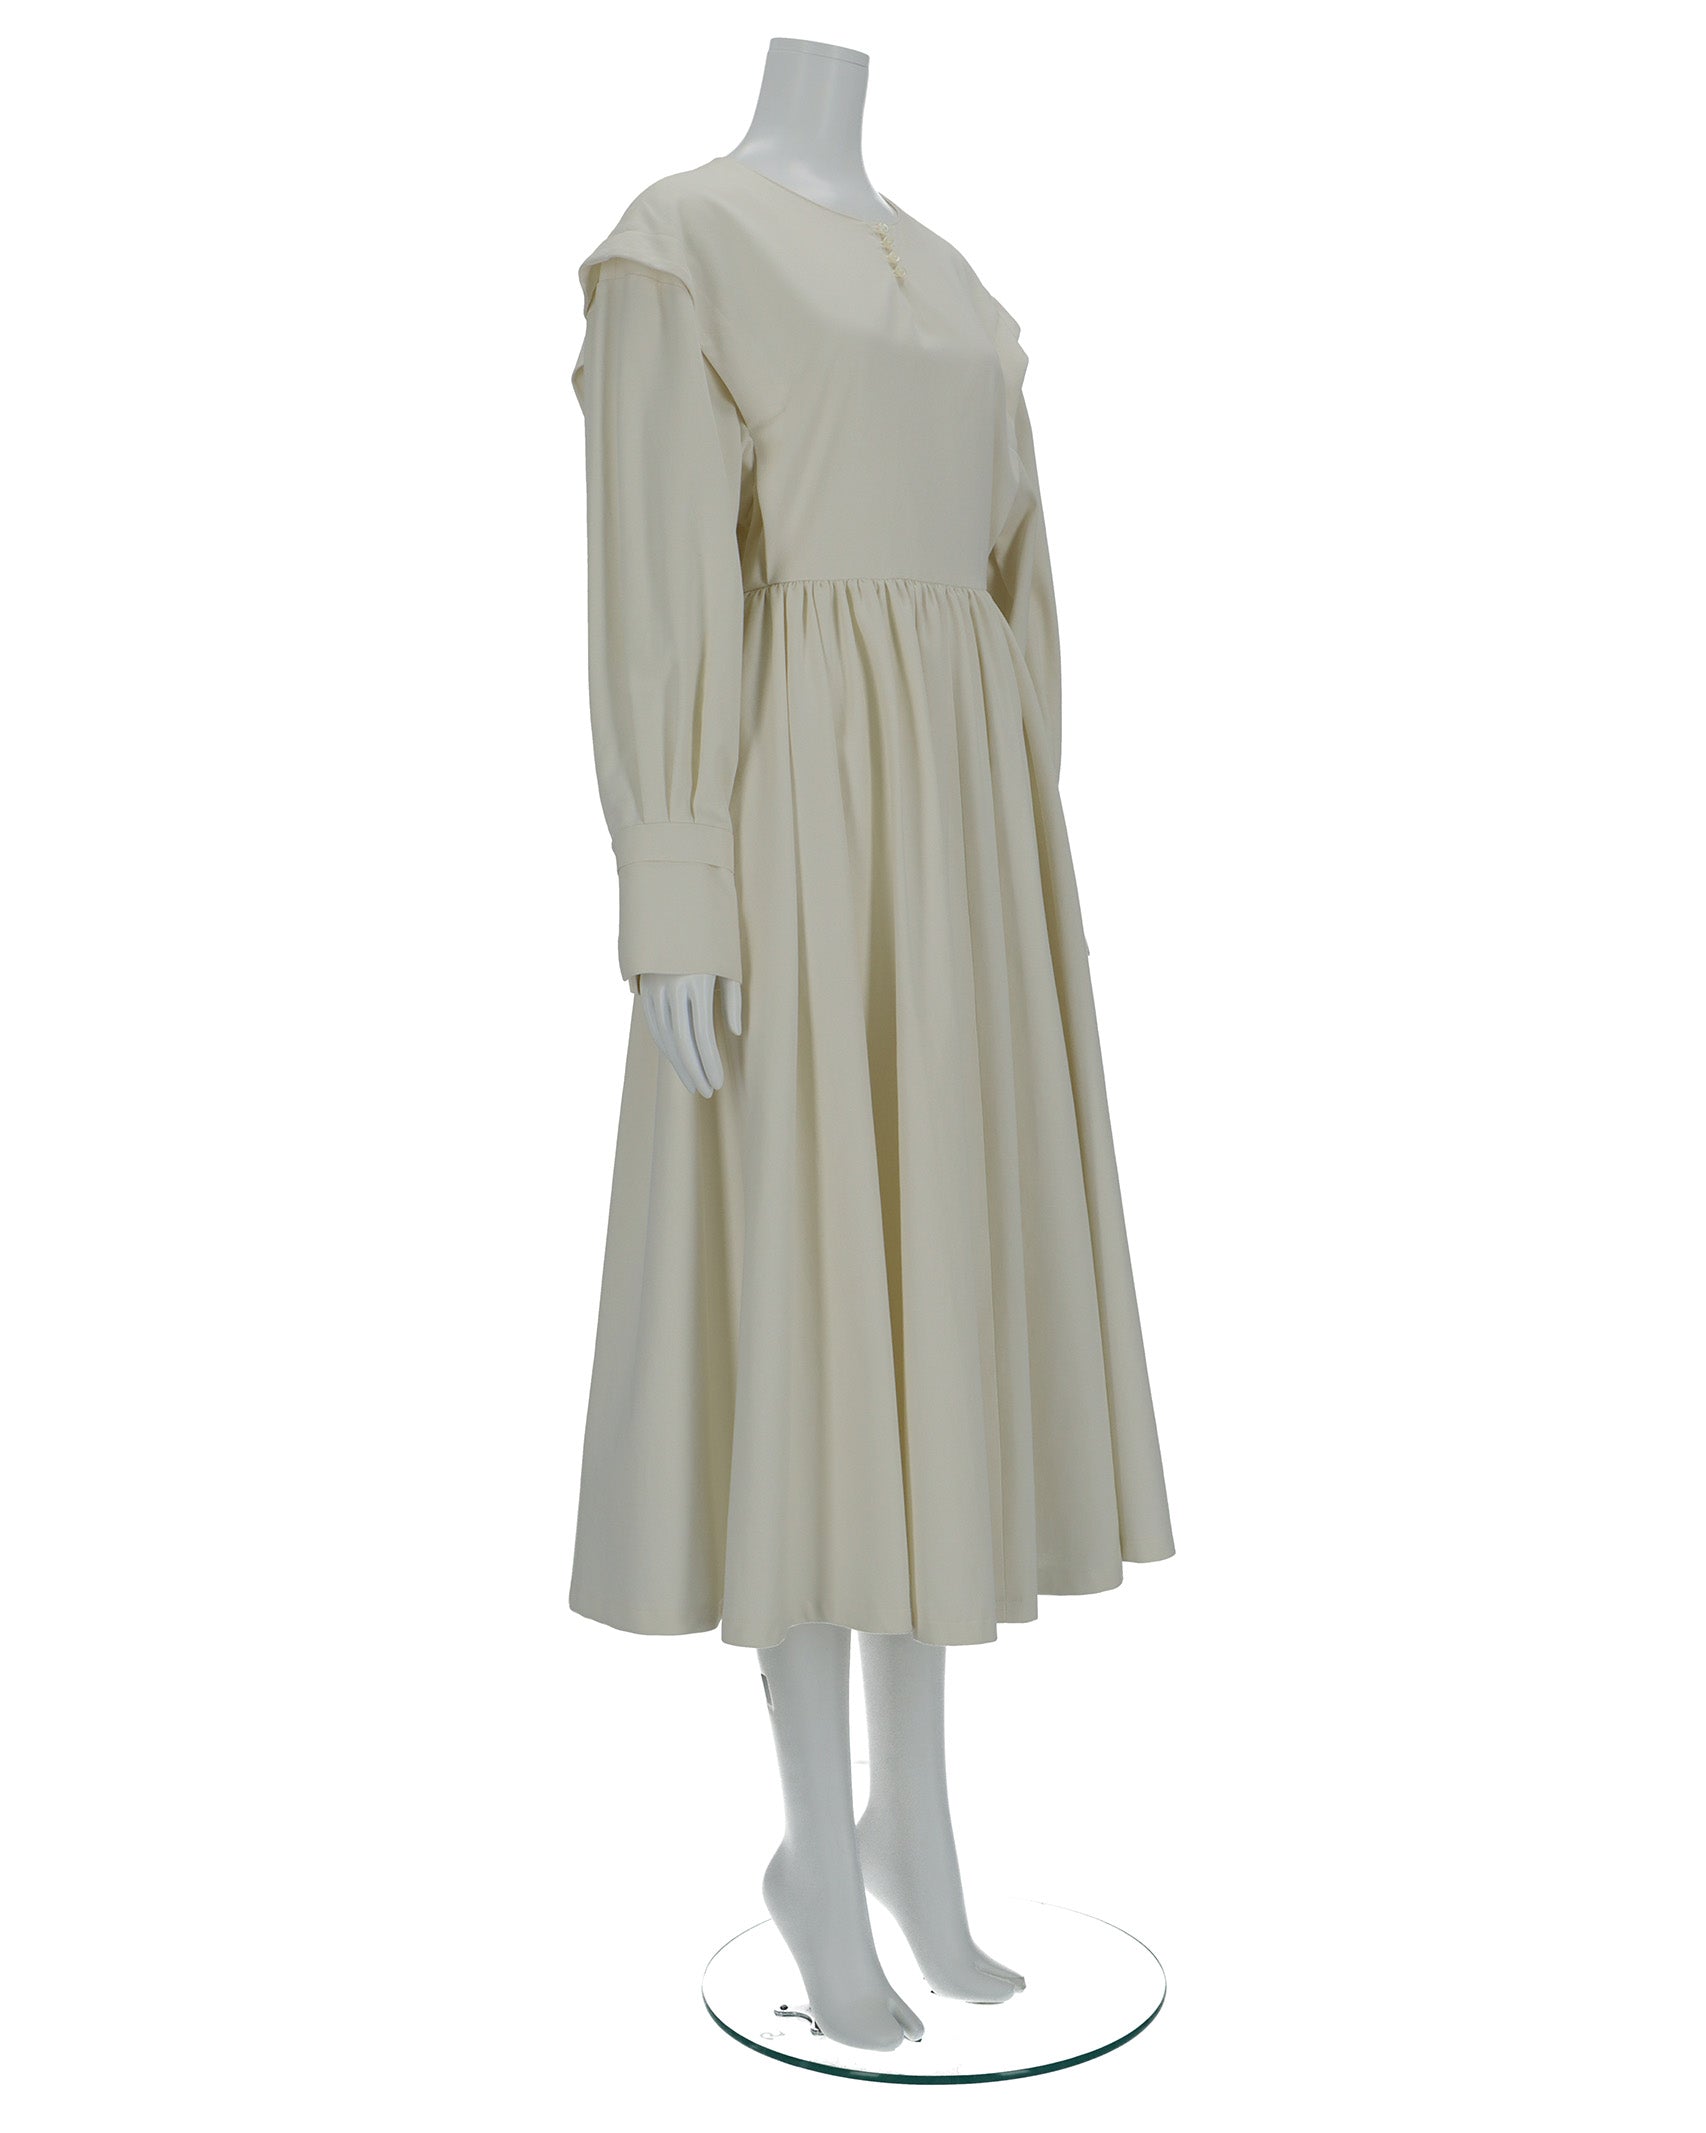 THE DRESS grand fond blanc #04 foufou - ワンピース